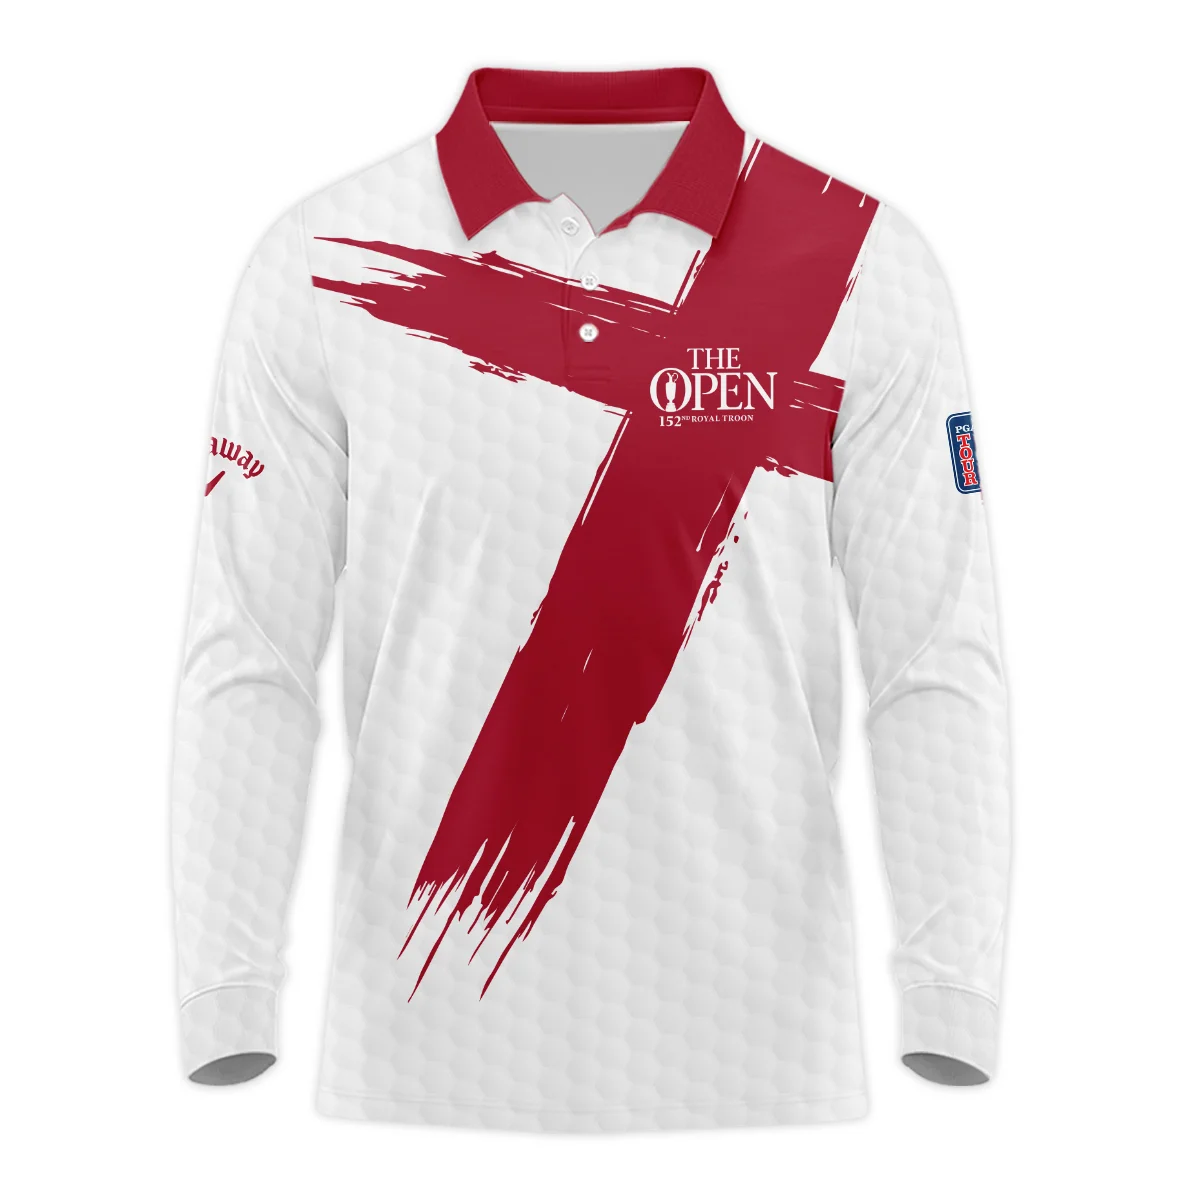 Callaway 152nd The Open Championship Golf Sport Unisex Sweatshirt Red White Golf Pattern All Over Print Sweatshirt